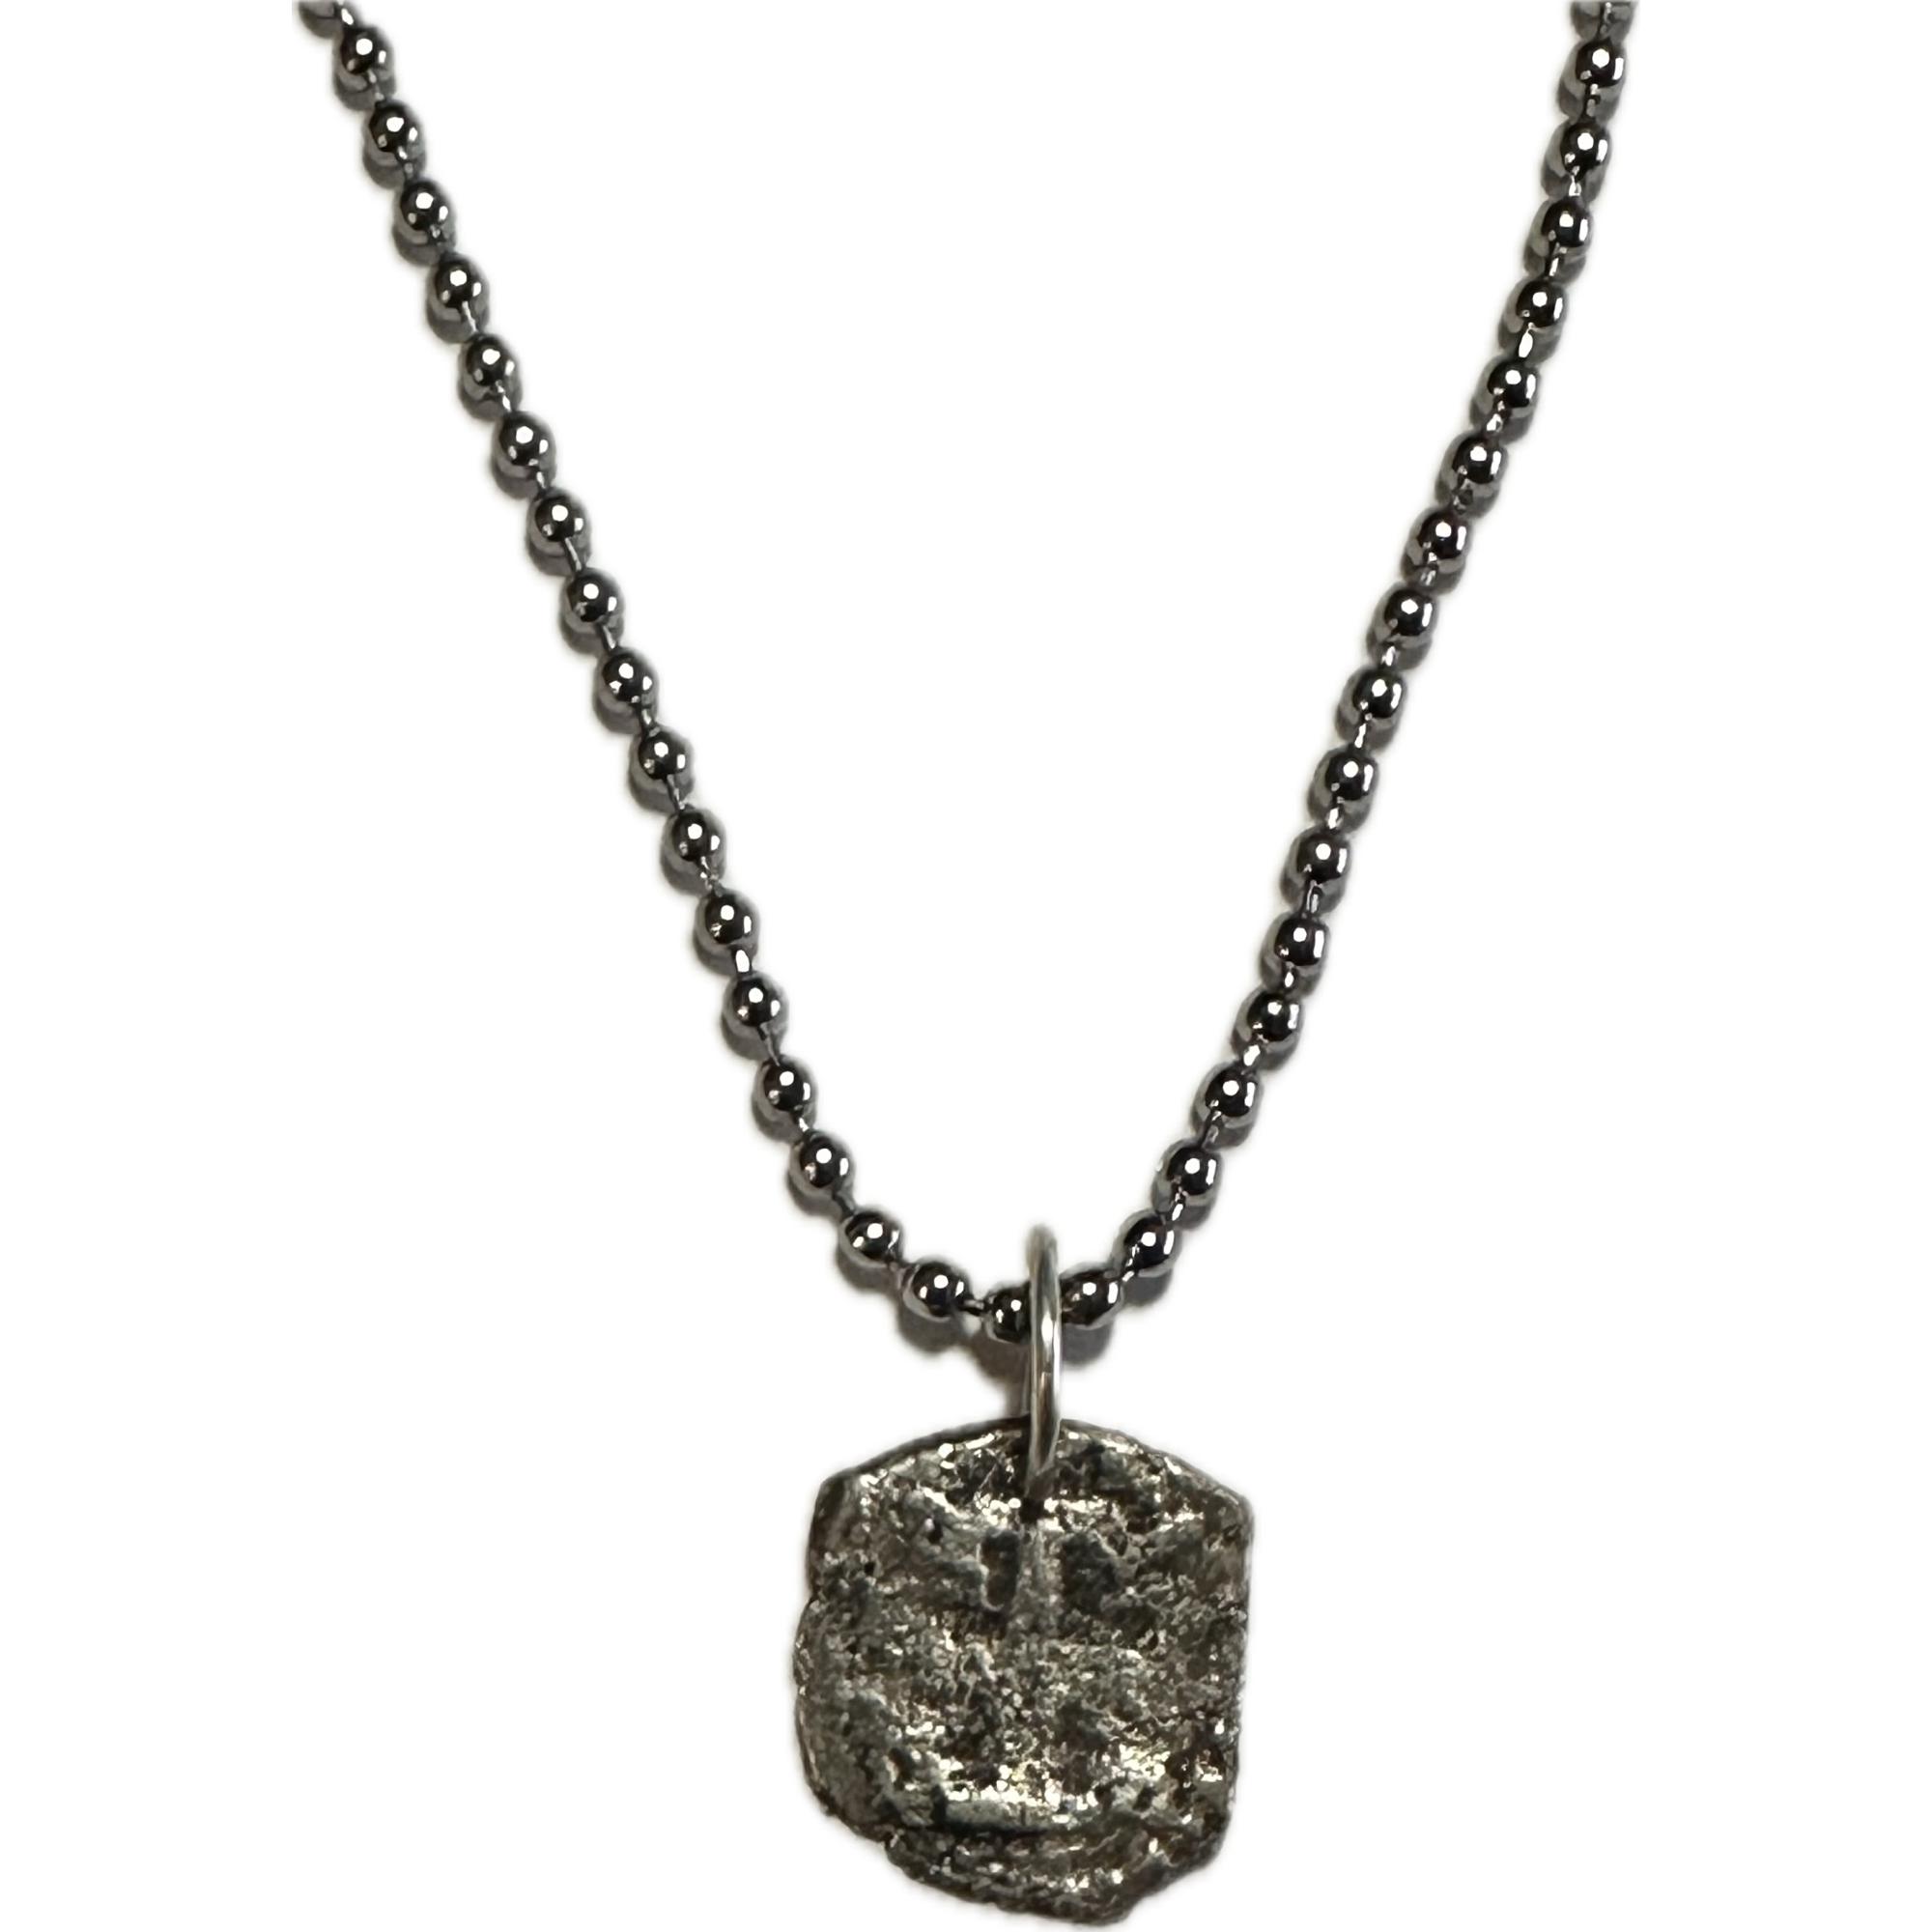 1/4 Reale cob pendant, Shipwreck Silver Prehistoric Online